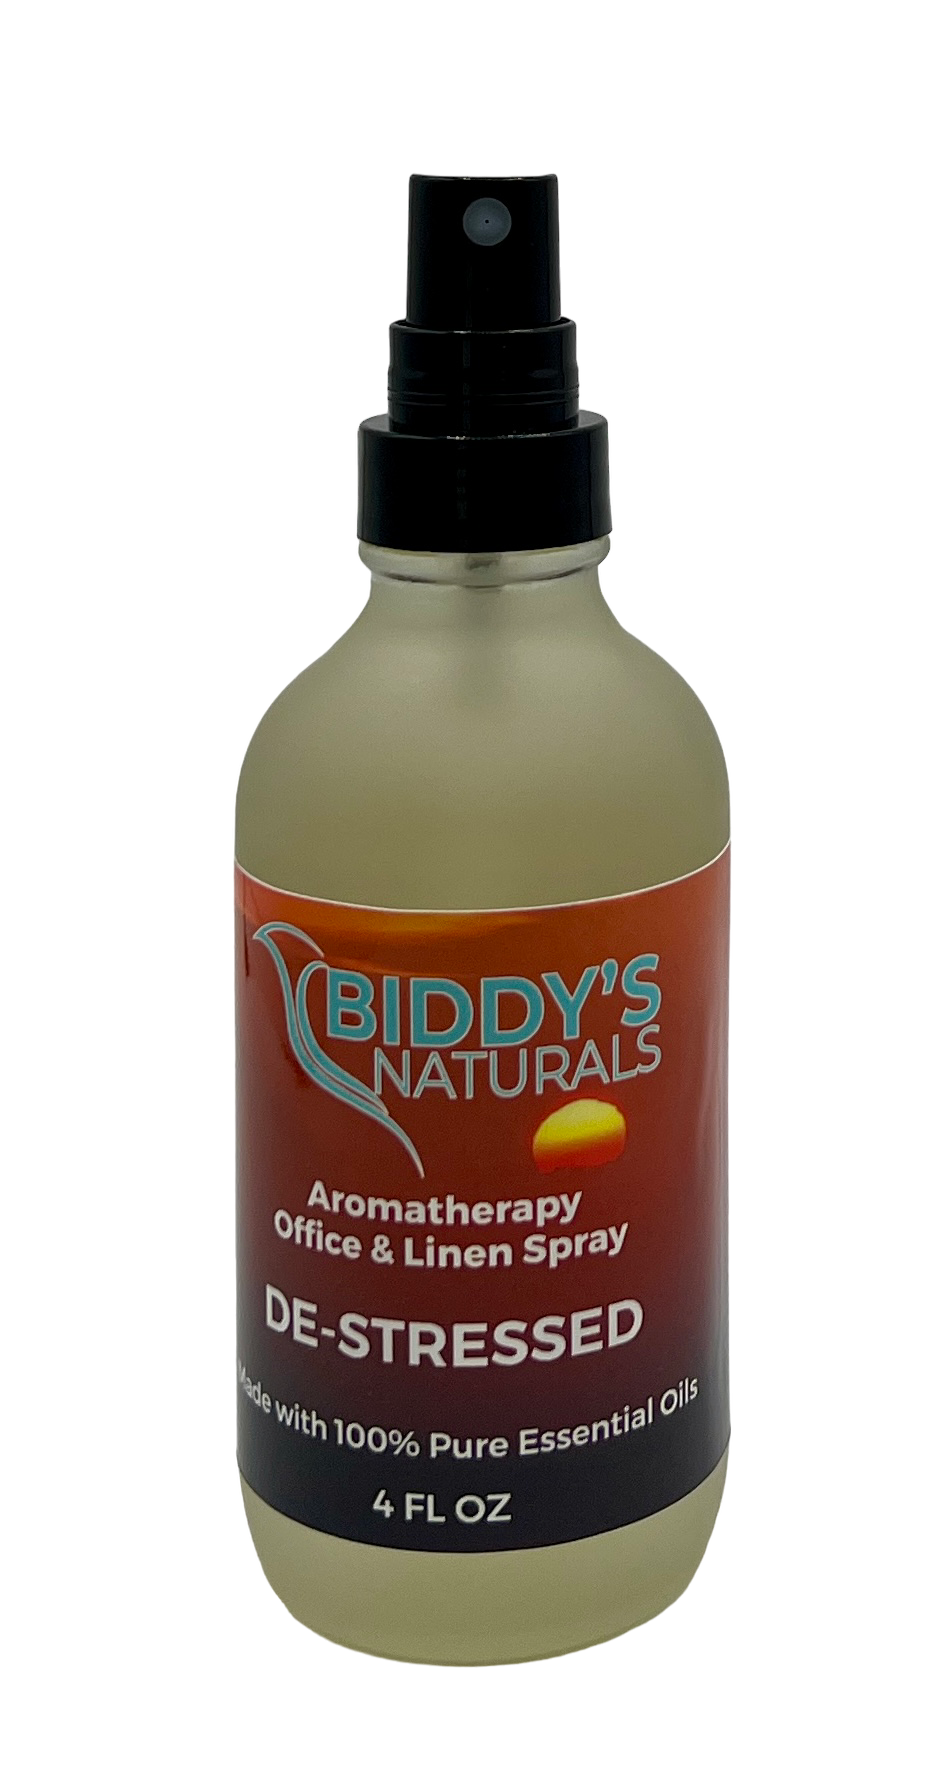 De-Stressed Office & Linen Spray made with 100% Pure Essential Oils Clementine, Orange & Spearmint. Focus